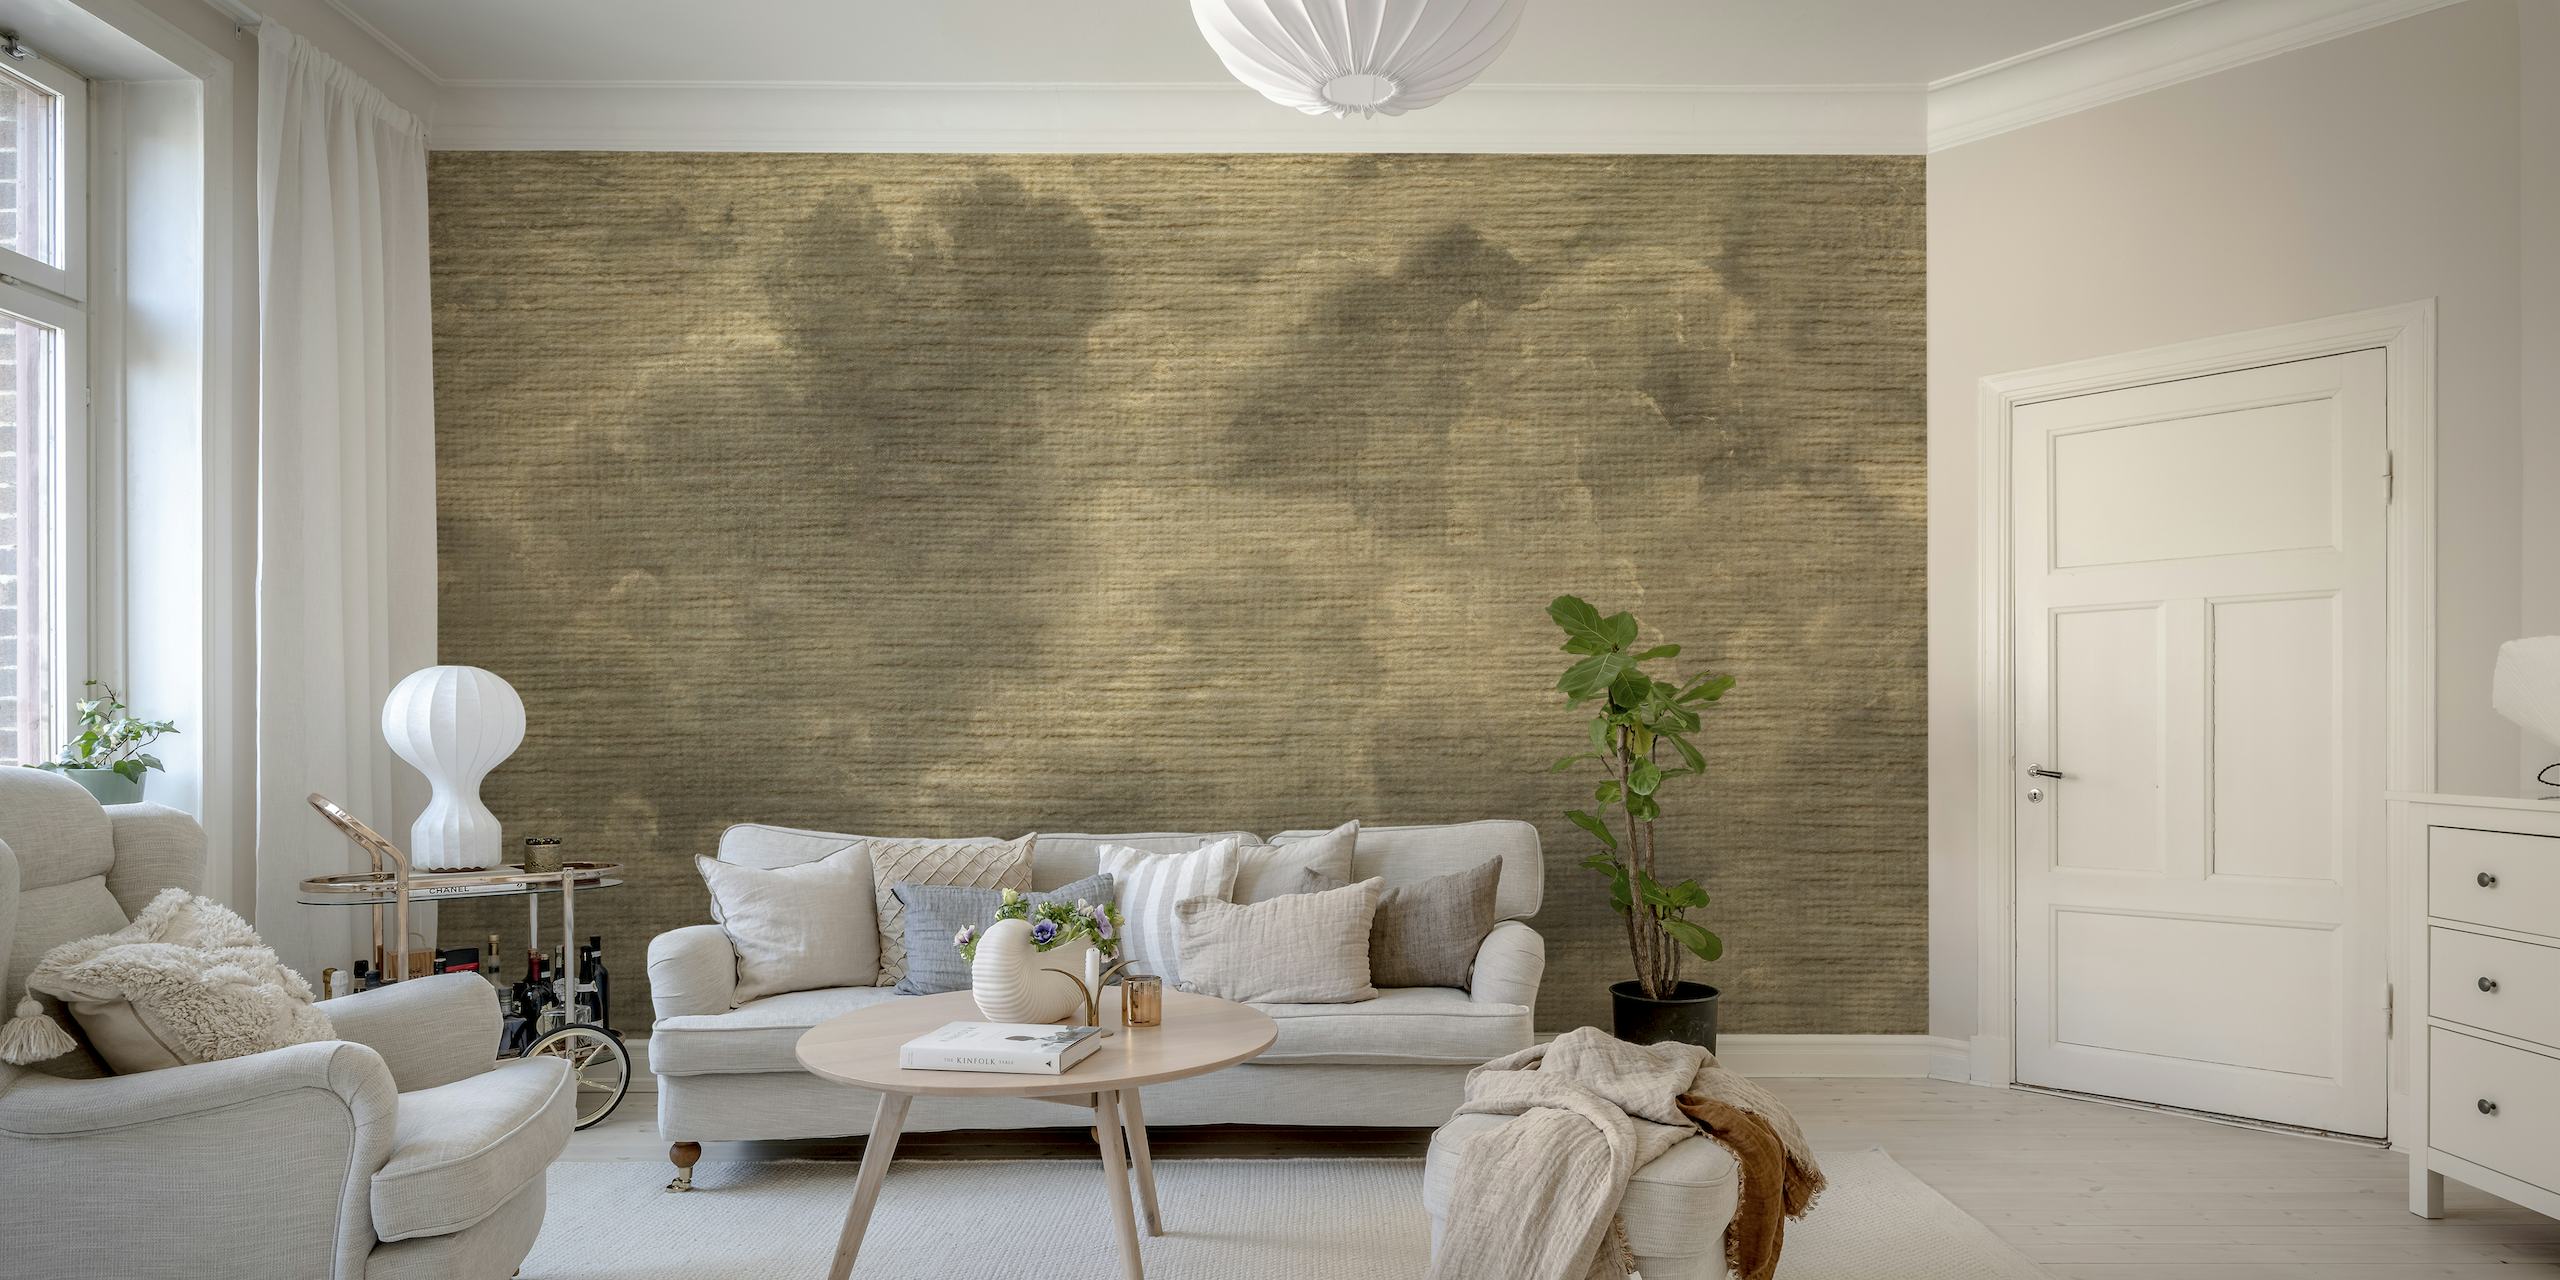 Texture Sepia Clouds wallpaper